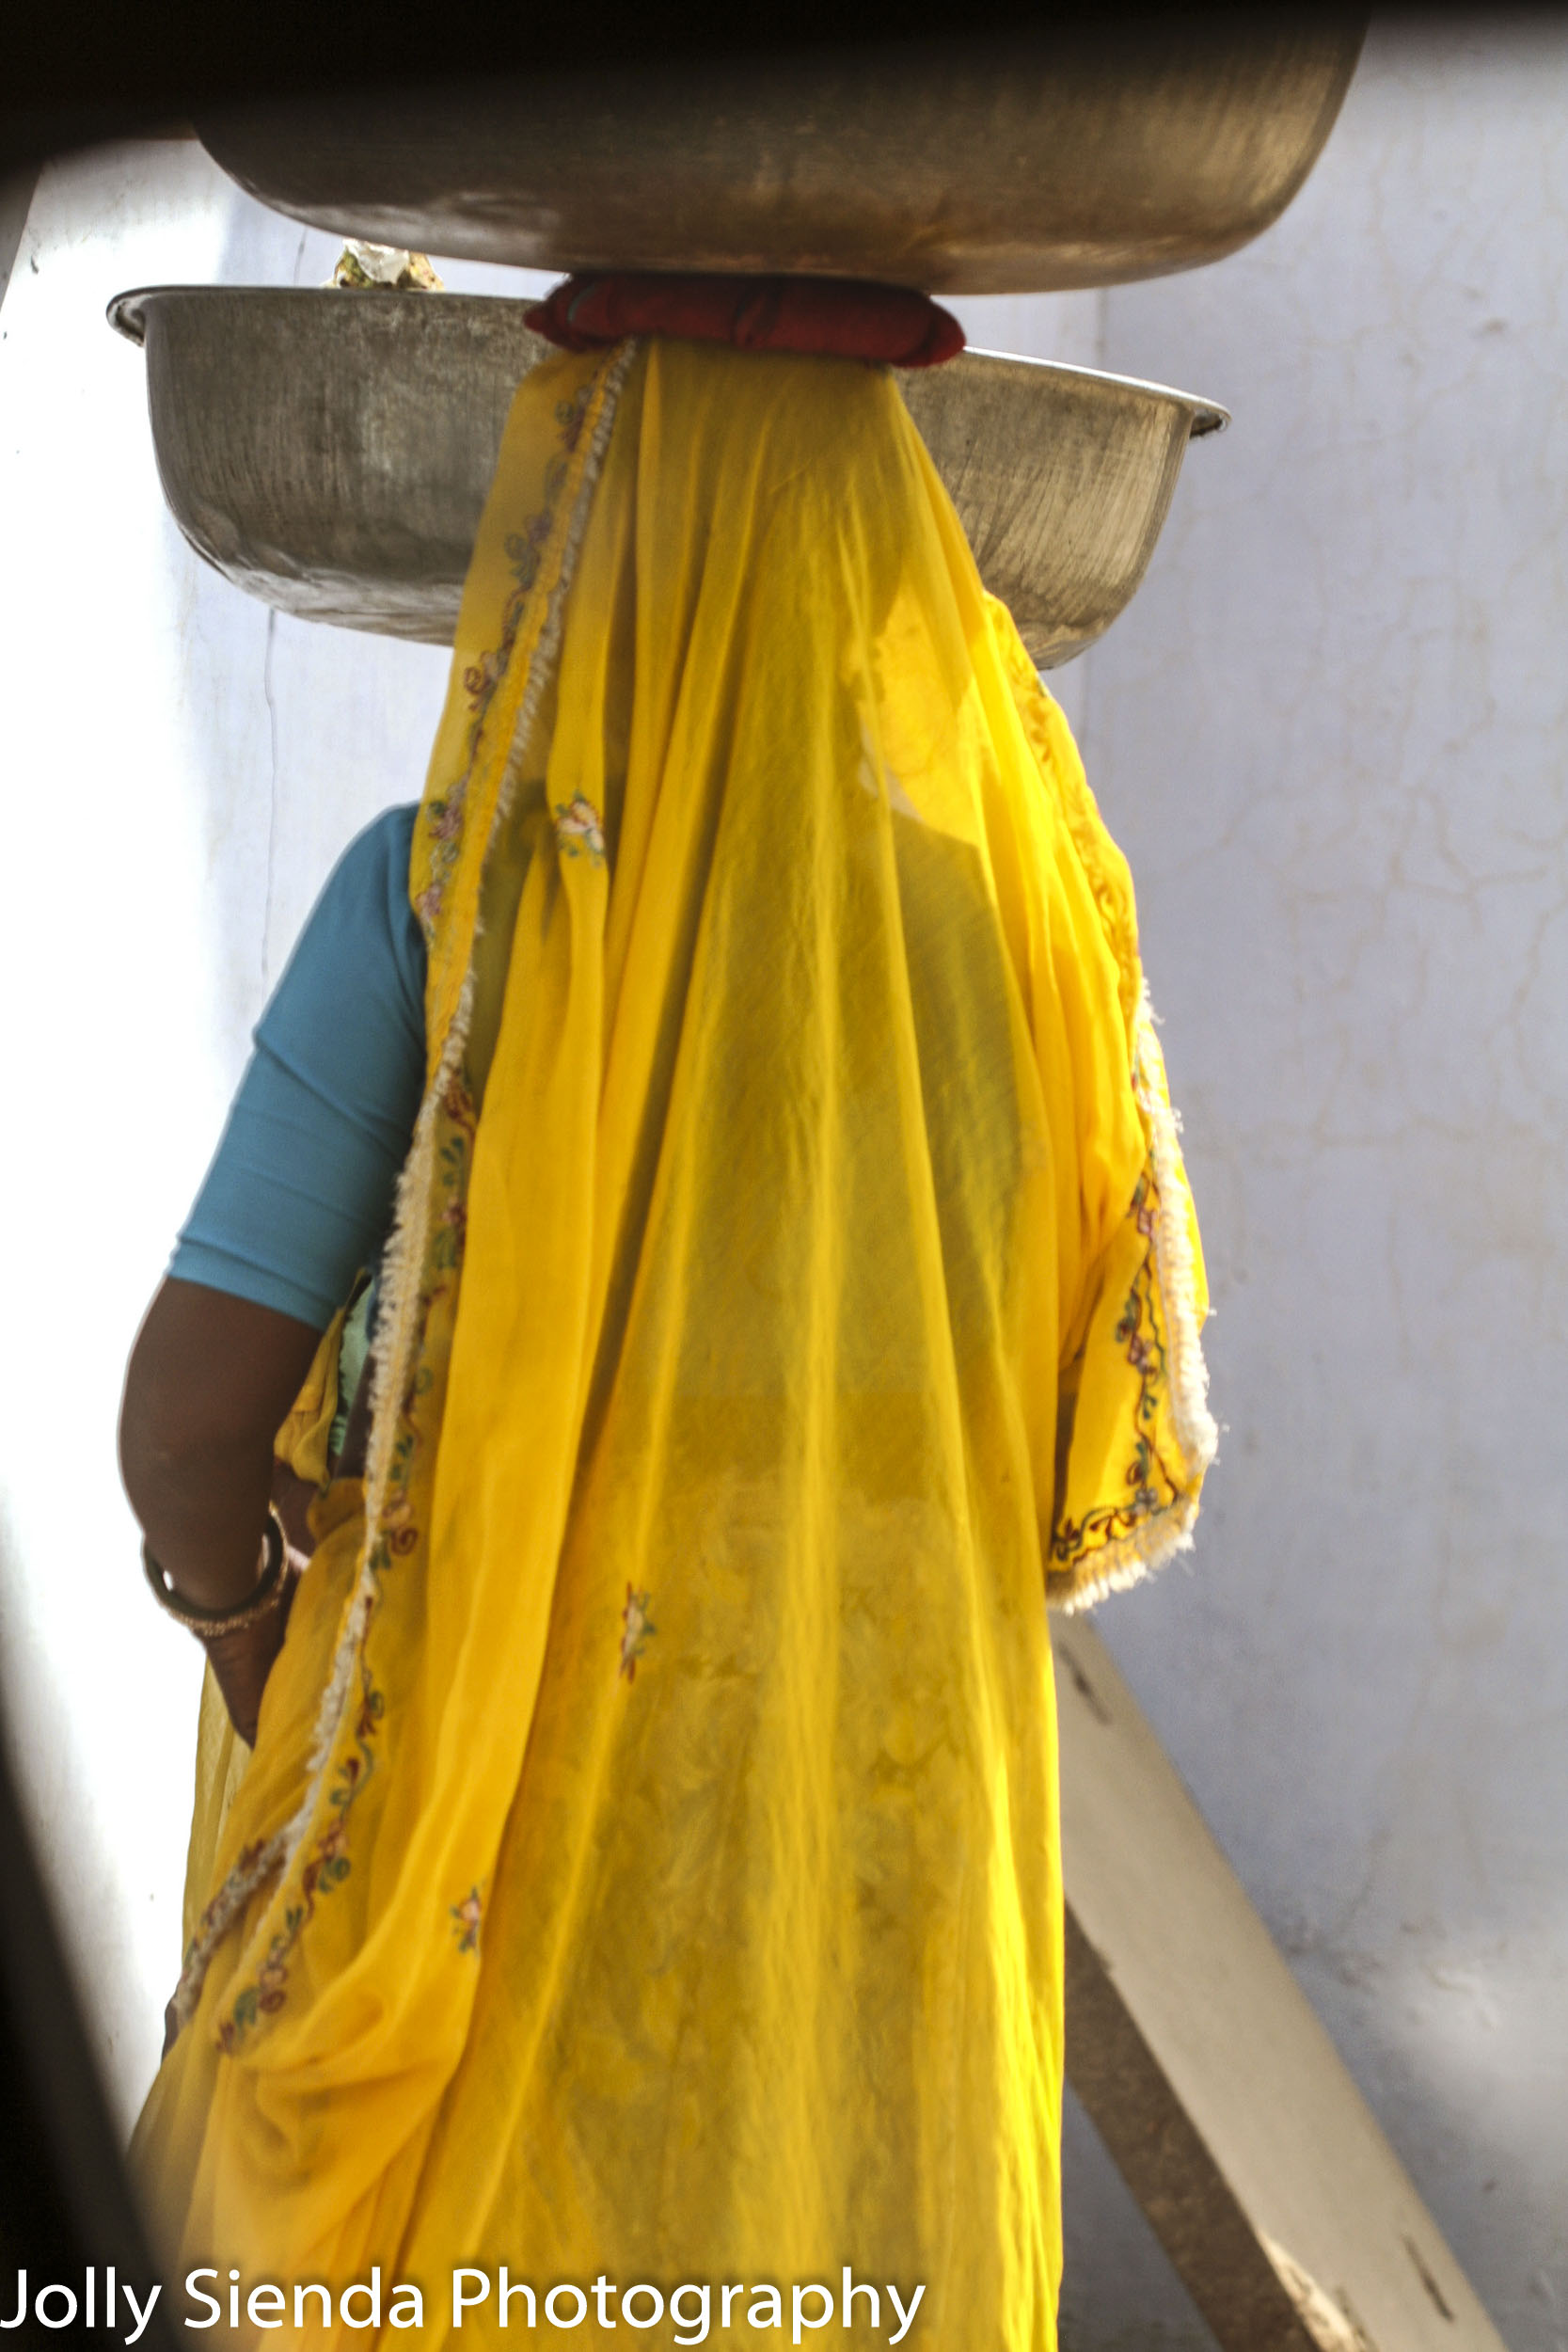 Woman wearing a sari balances copper bowls on her head